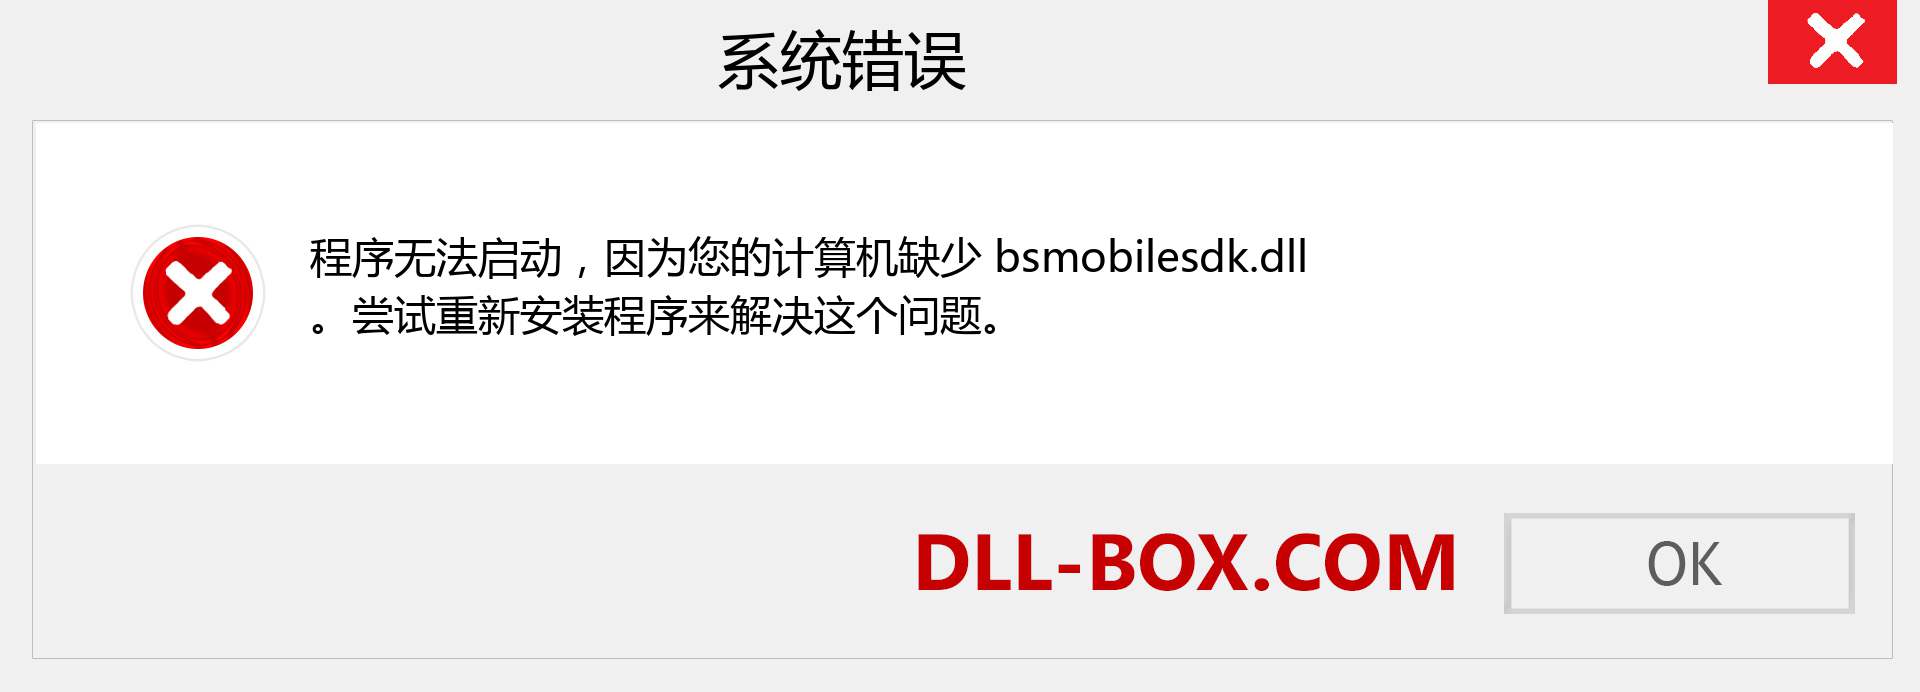 bsmobilesdk.dll 文件丢失？。 适用于 Windows 7、8、10 的下载 - 修复 Windows、照片、图像上的 bsmobilesdk dll 丢失错误